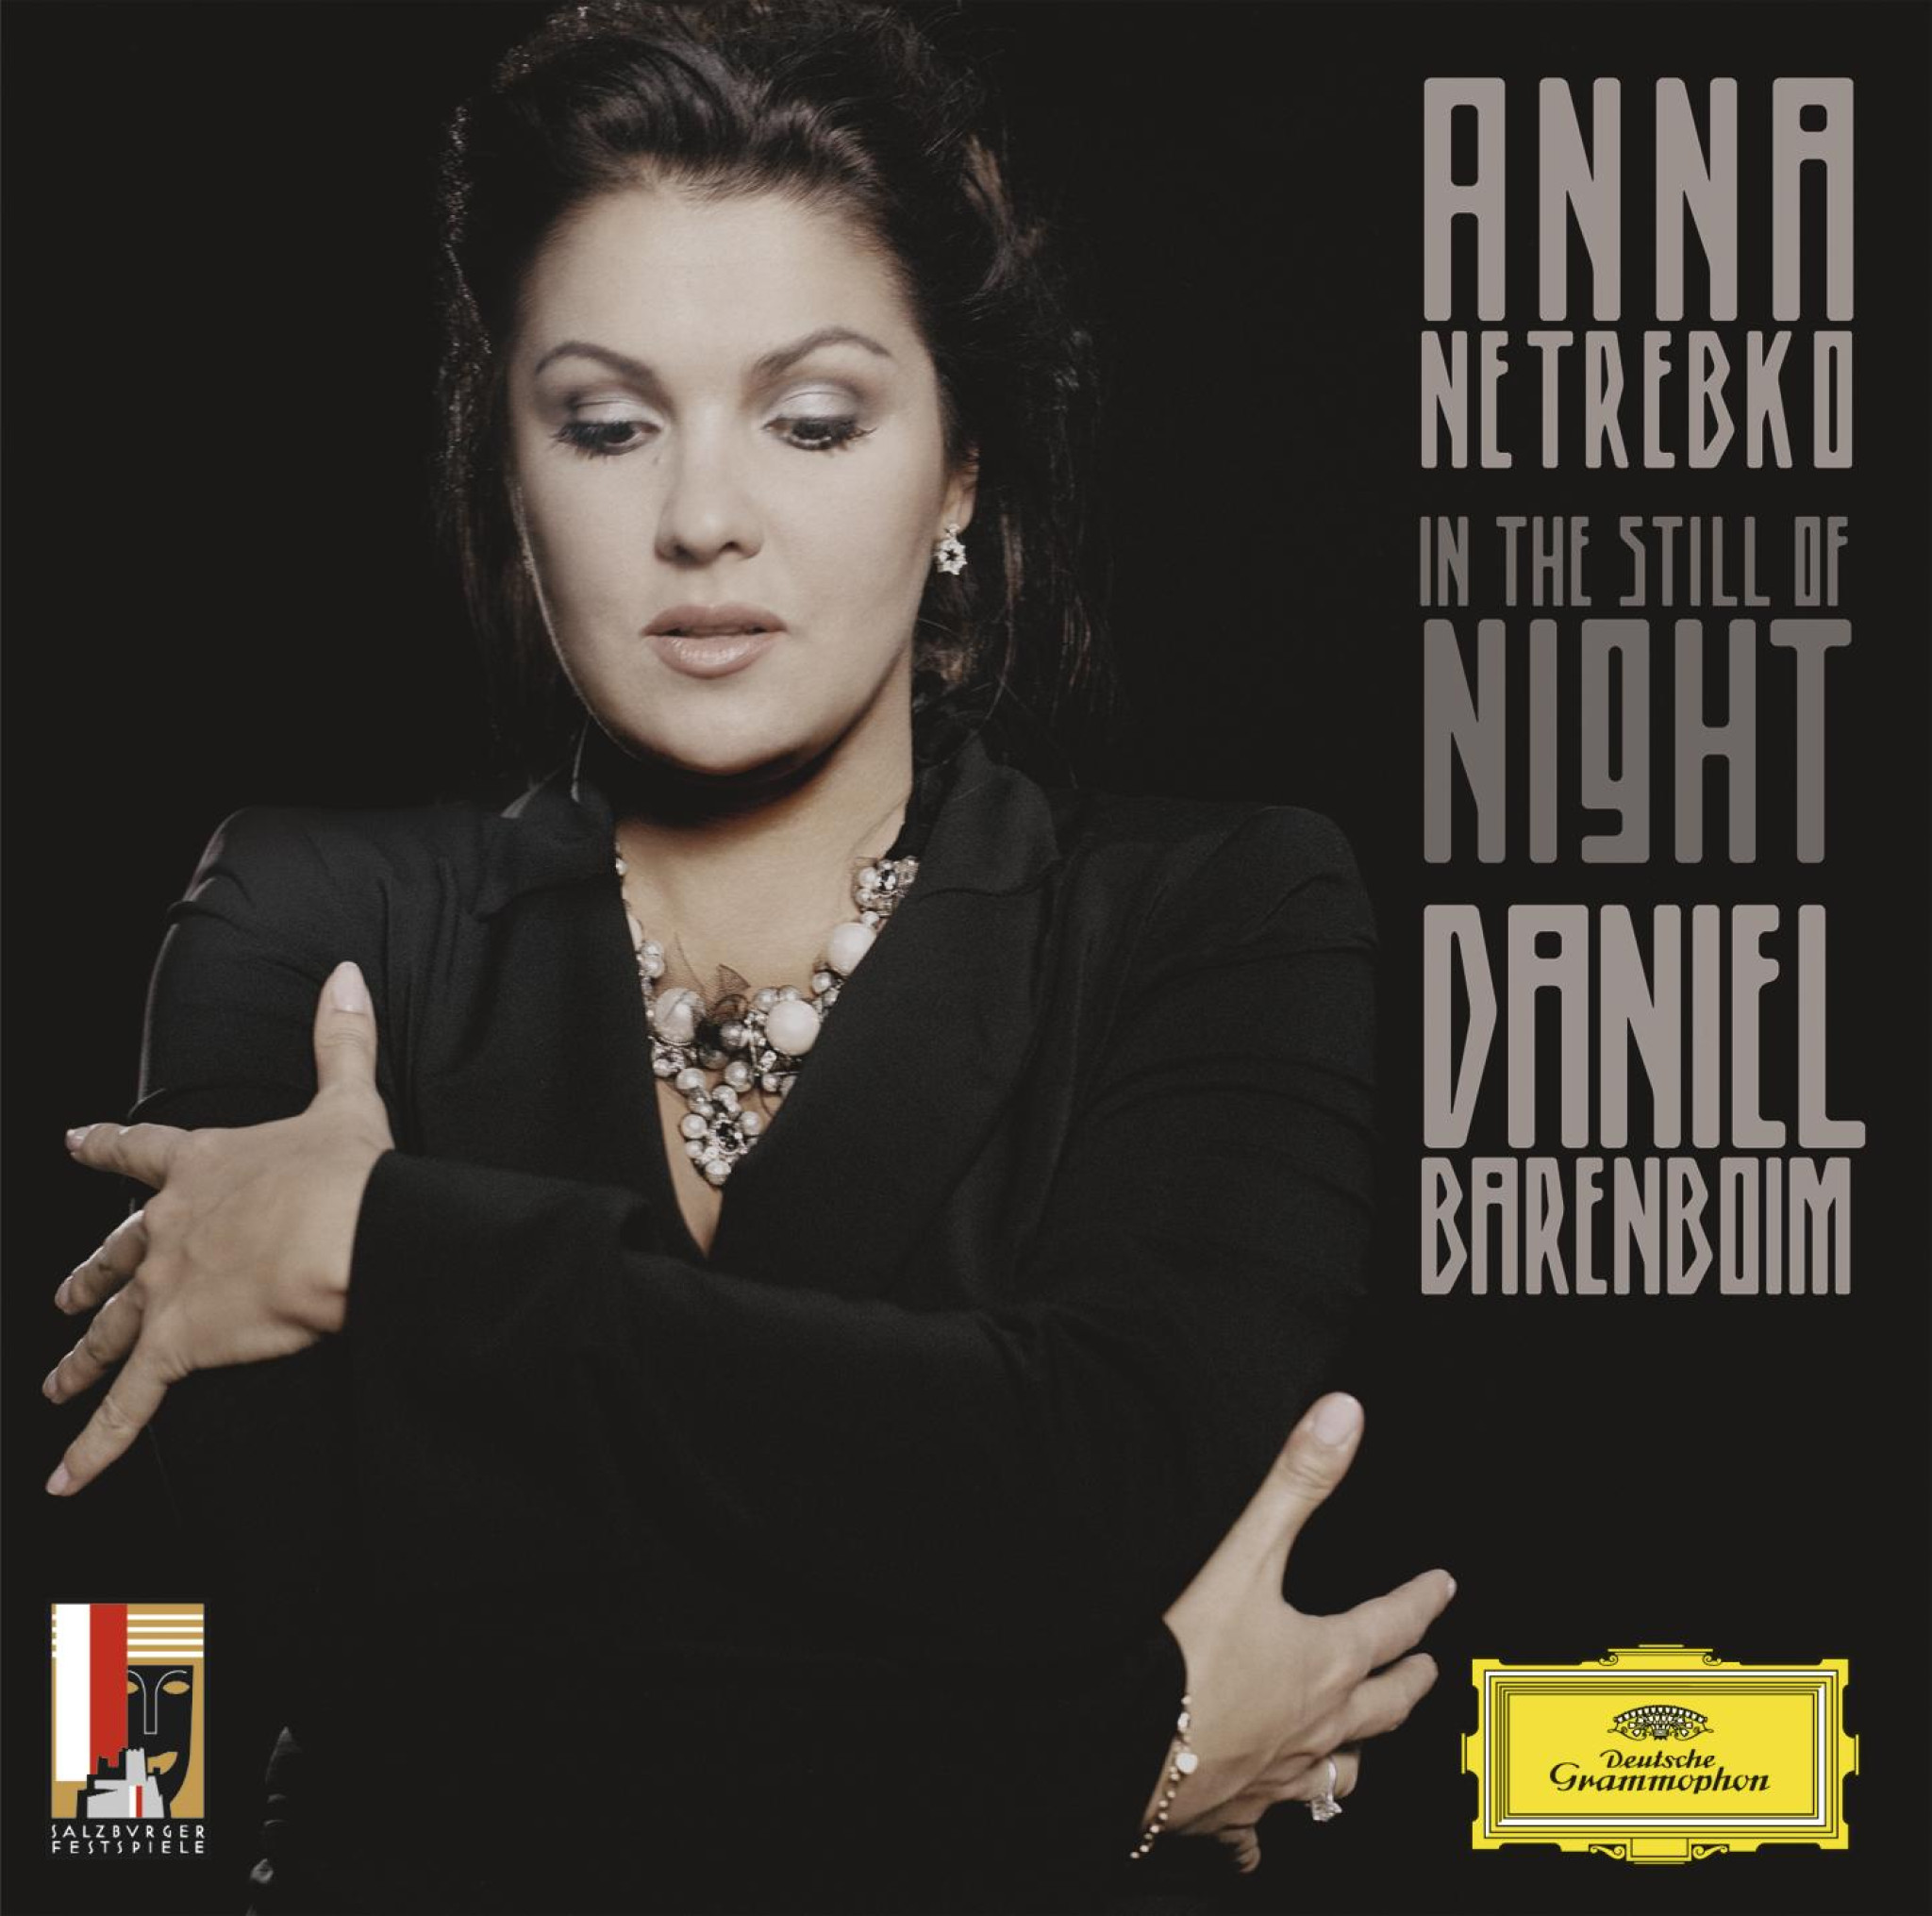 In the Still of Night: Netrebko,Anna/Barenboim,Daniel